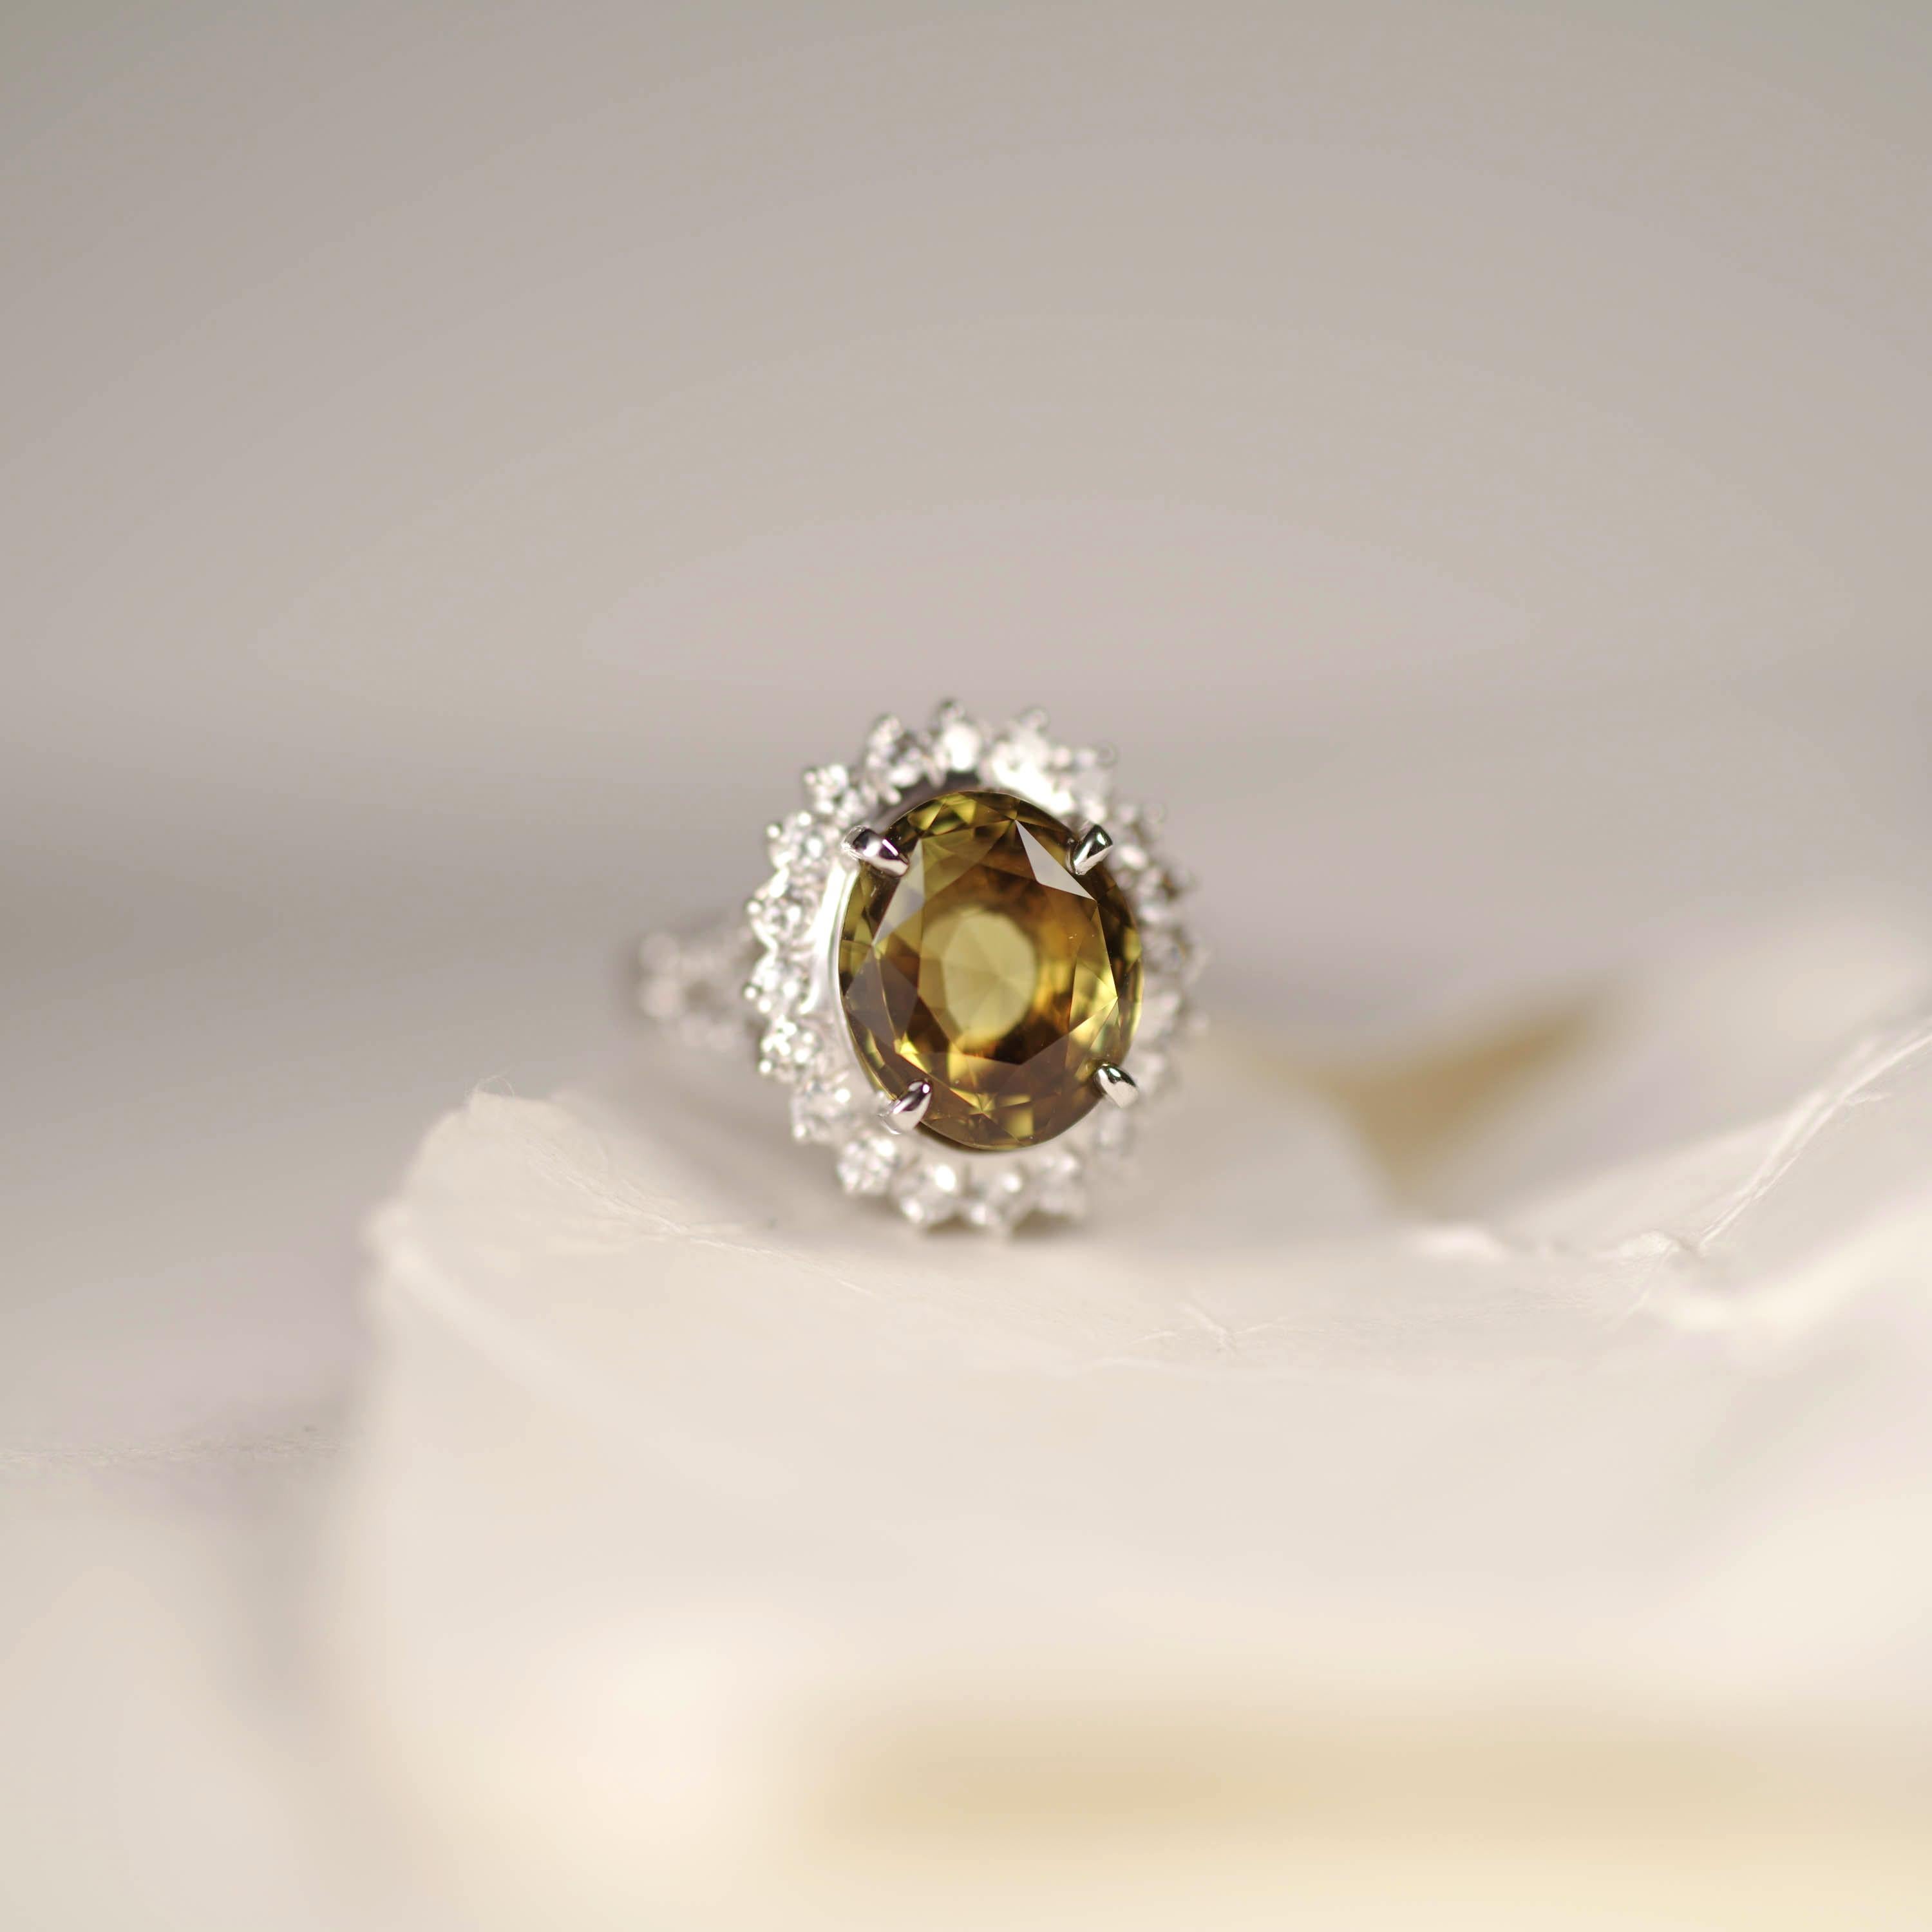 Alexandrite & Diamond Ring 7.35 Carats, Rare Color Change Gem Certified 8